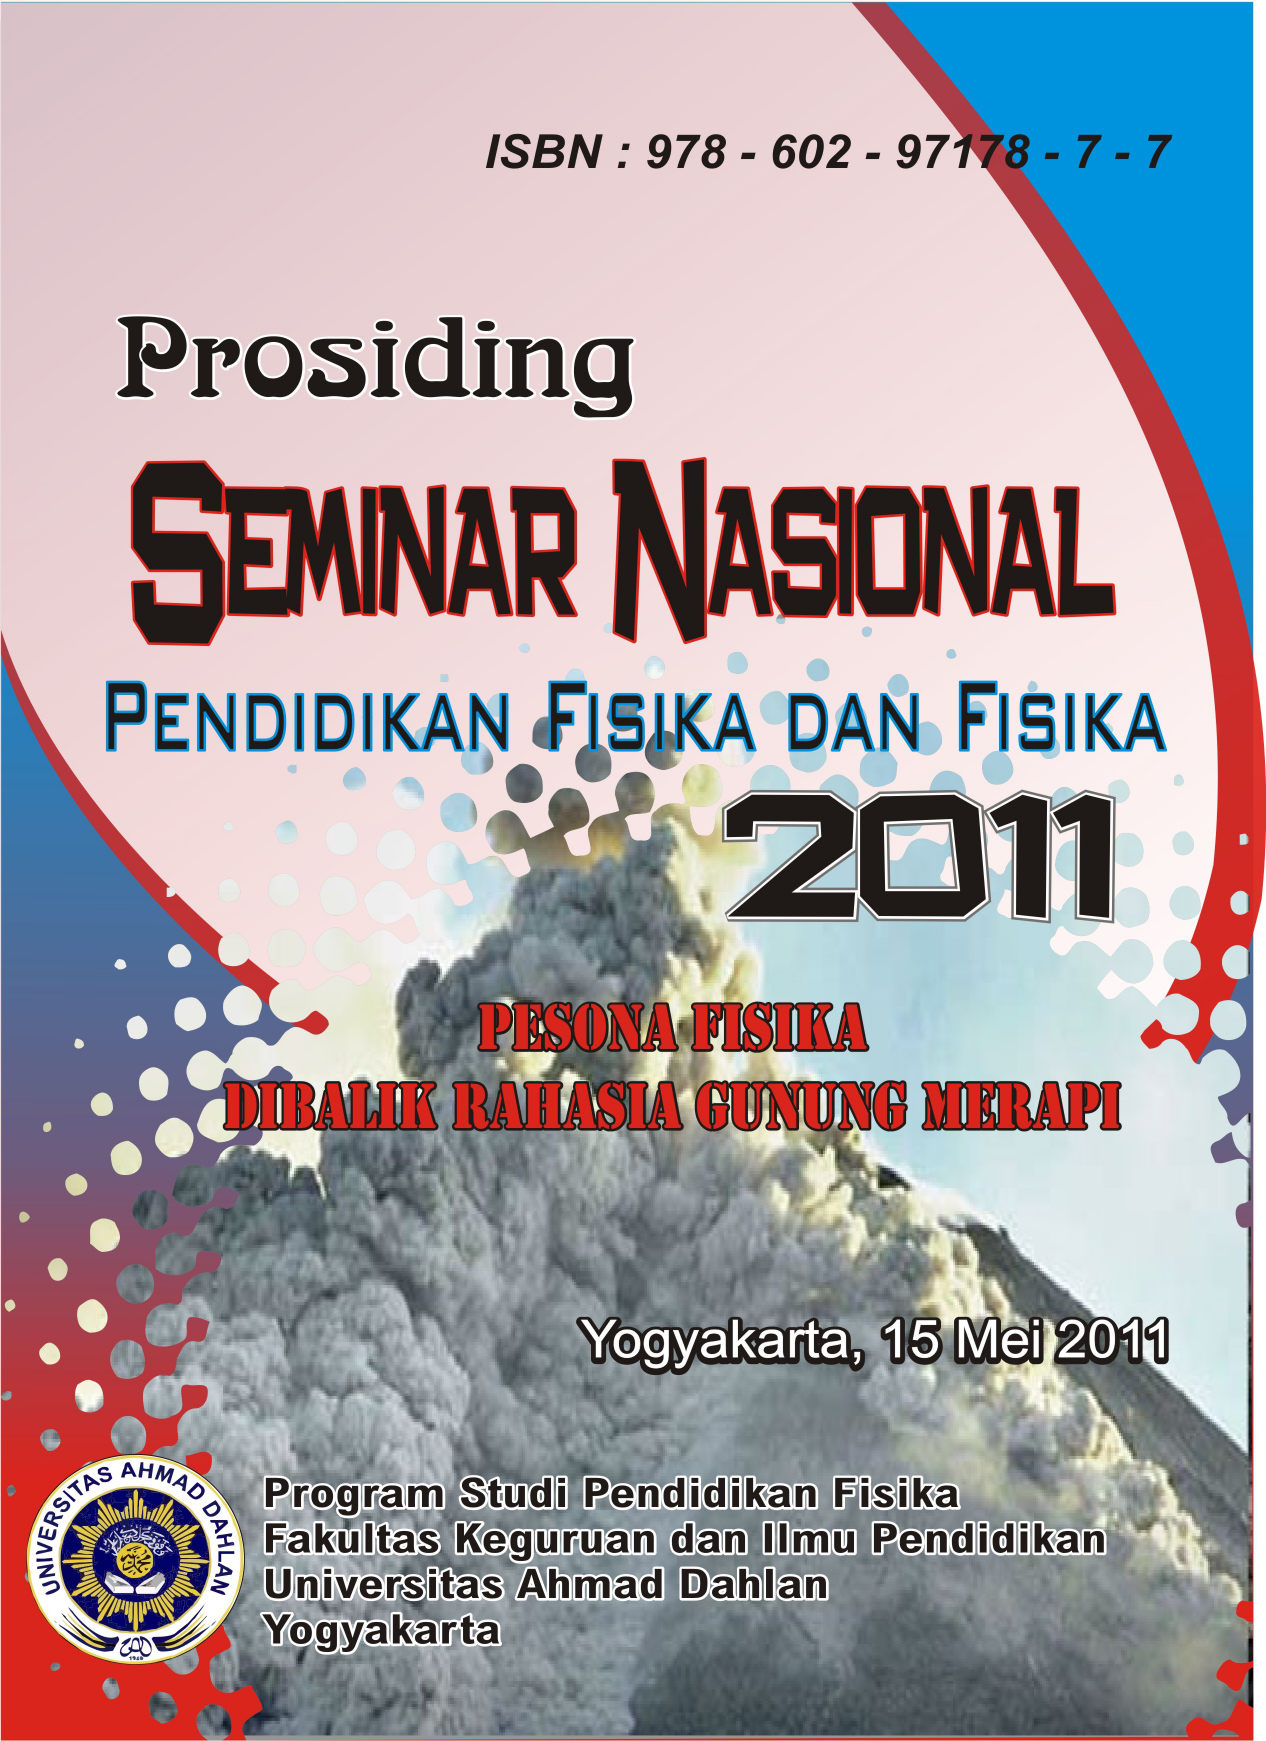 PROSIDING SEMINAR NASIONAL PENDIDIKAN FISIKA DAN FISIKA “ PESONA FISIKA DIBALIK RAHASIA GUNUNG MERAPI” Yogyakarta 15 Mei 2011 Himpunan Mahasiswa Program